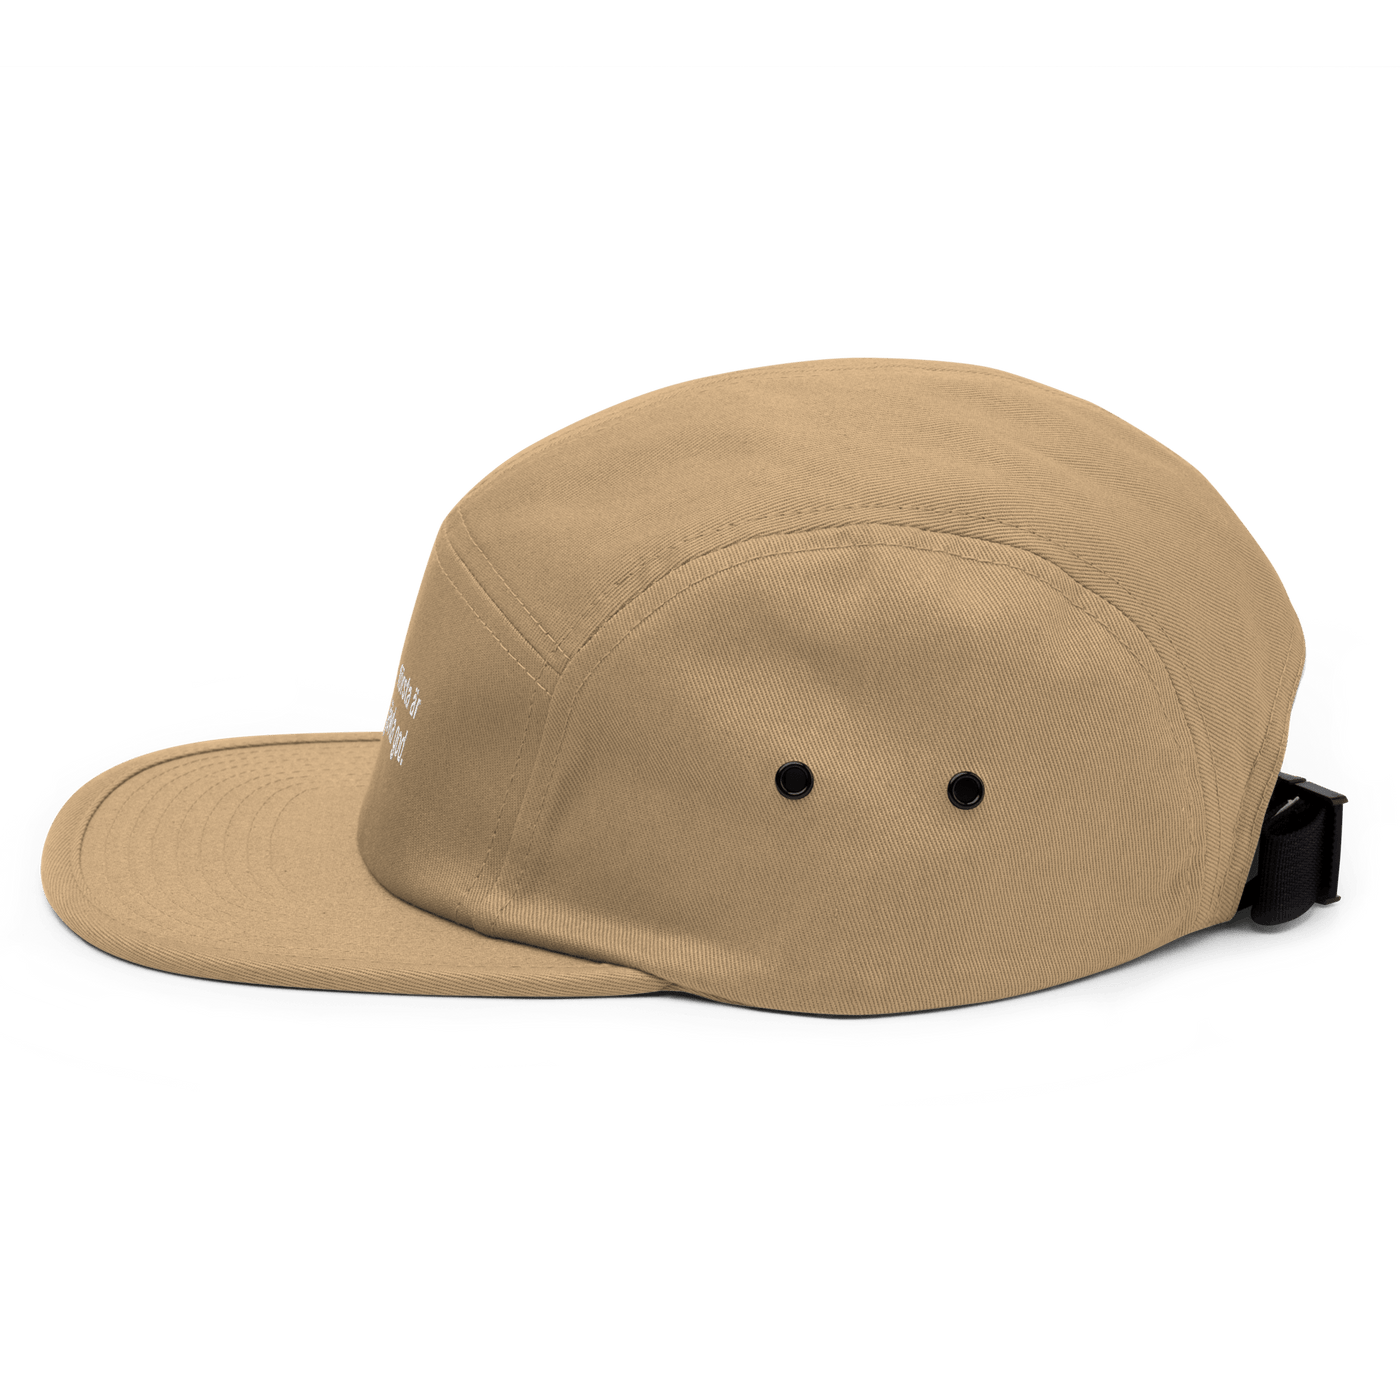 Den första Five Panel Hat - Khaki - - Just Another Cap Store